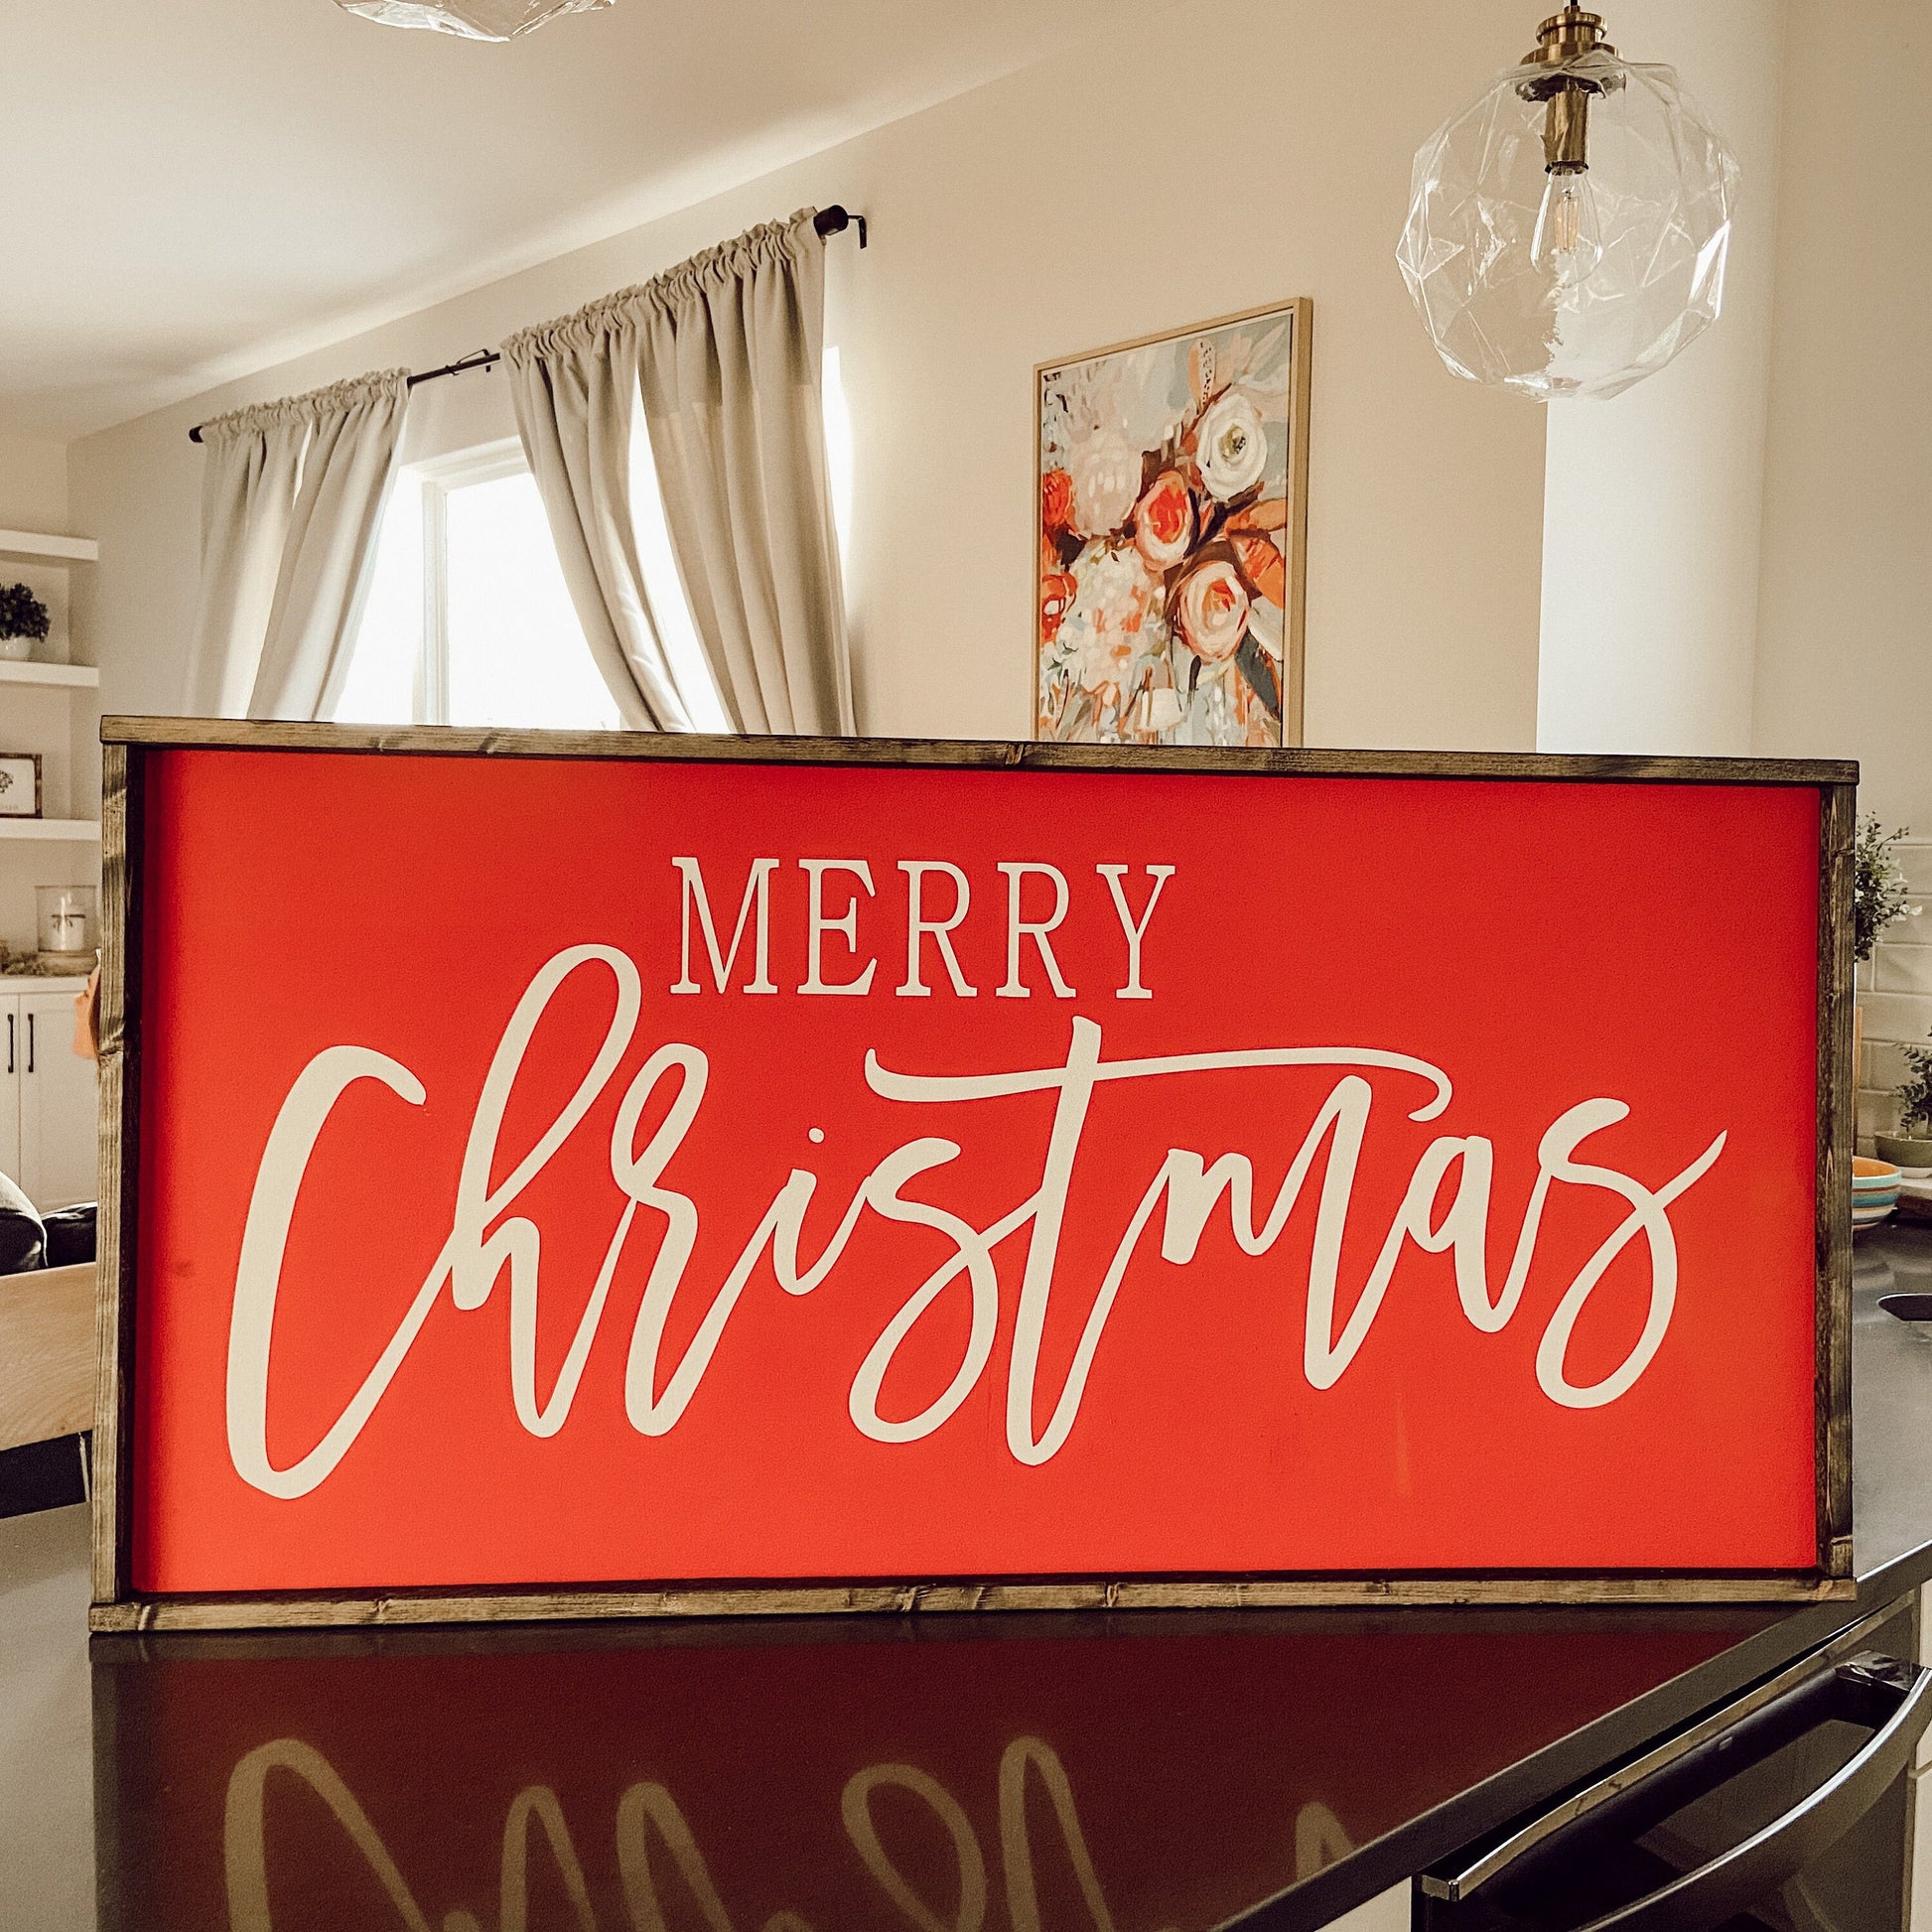 merry christmas - Christmas wood sign, mantle decor [FREE SHIPPING!]